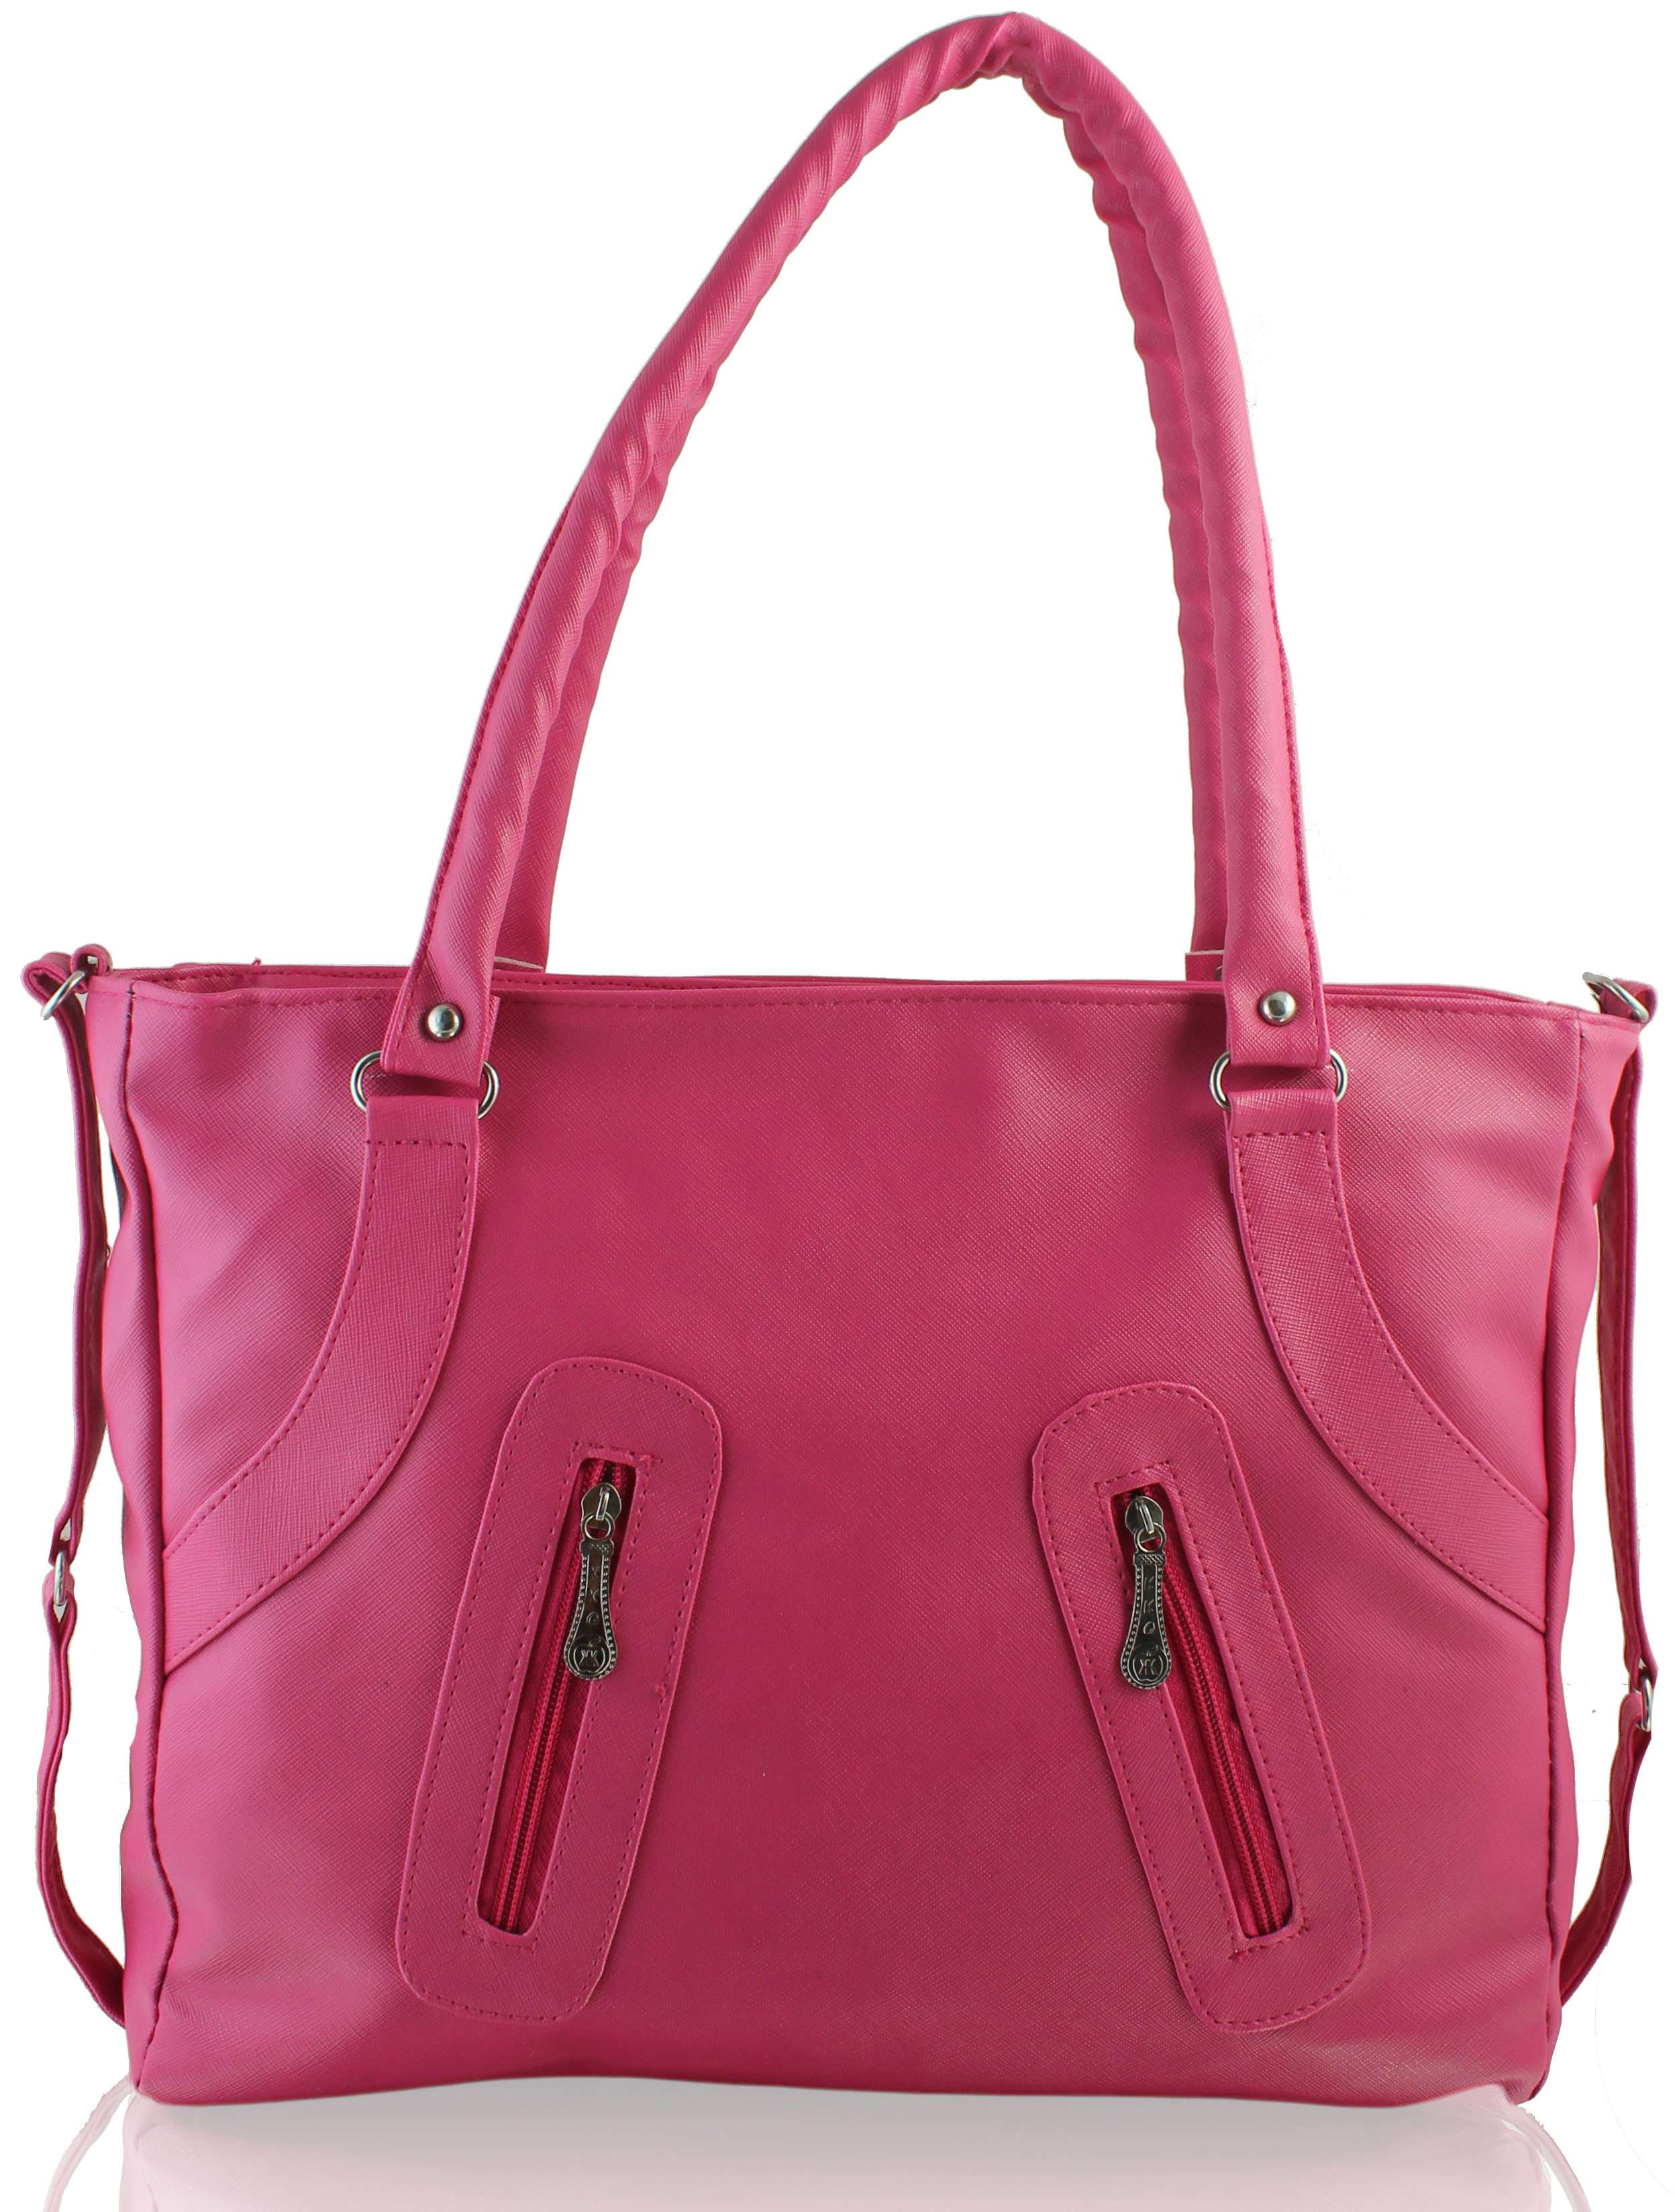 Buy Clementine Pink Handbag sskclem91 Online @ ₹499 from ShopClues